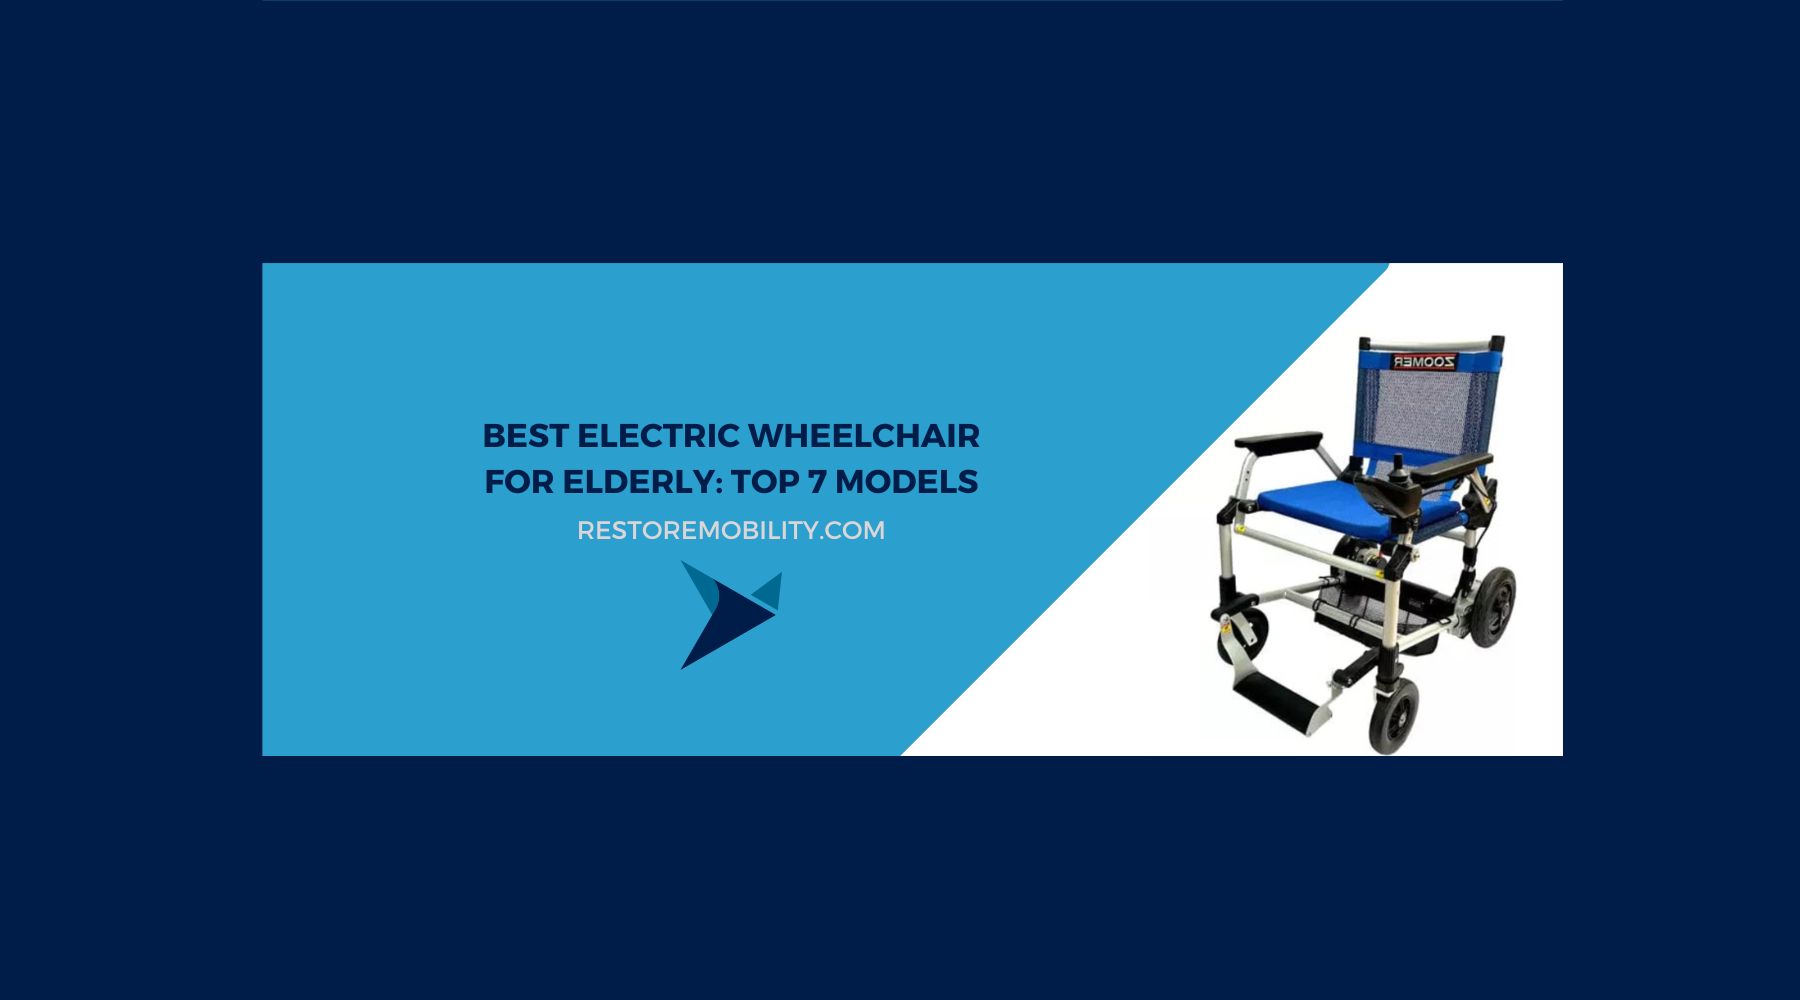 Best Electric Wheelchair for Elderly: Top 7 Models